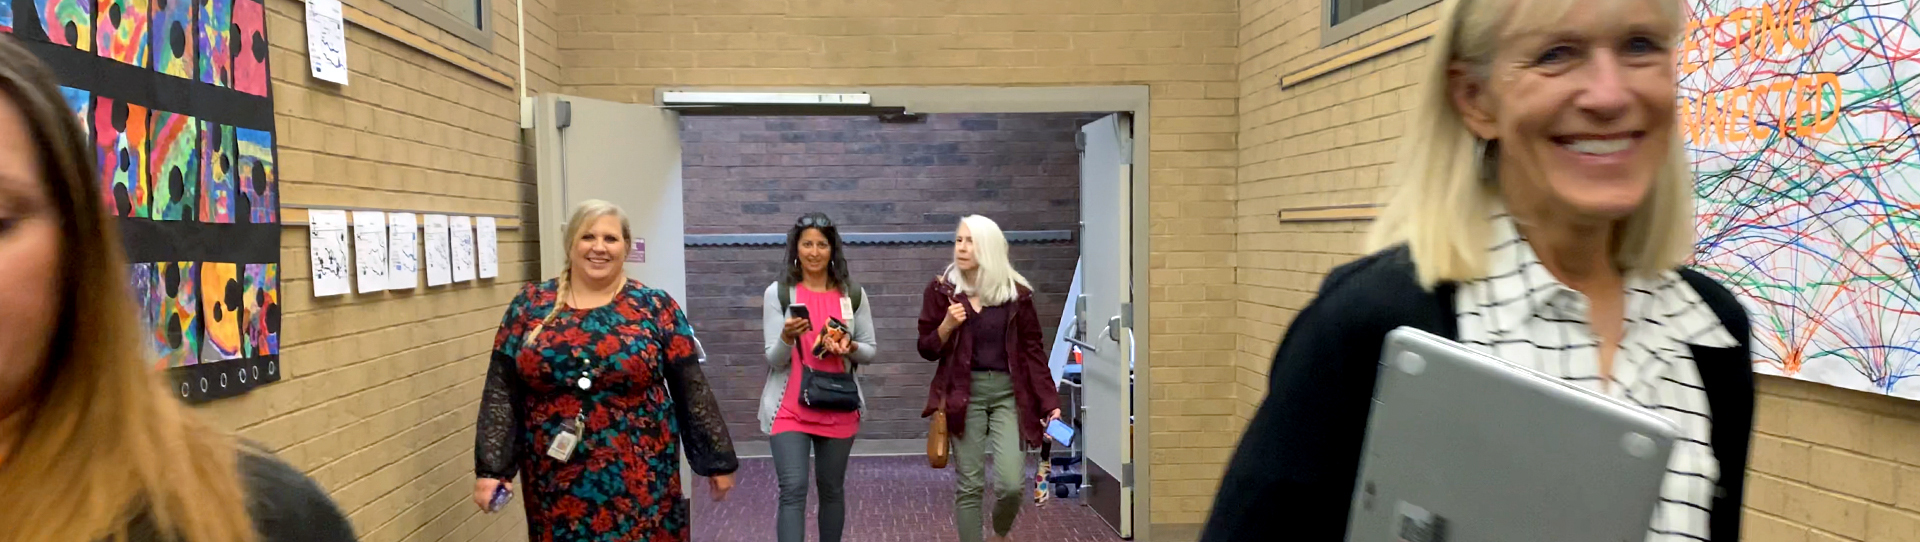 Image of the CITES team walking through a school hallway